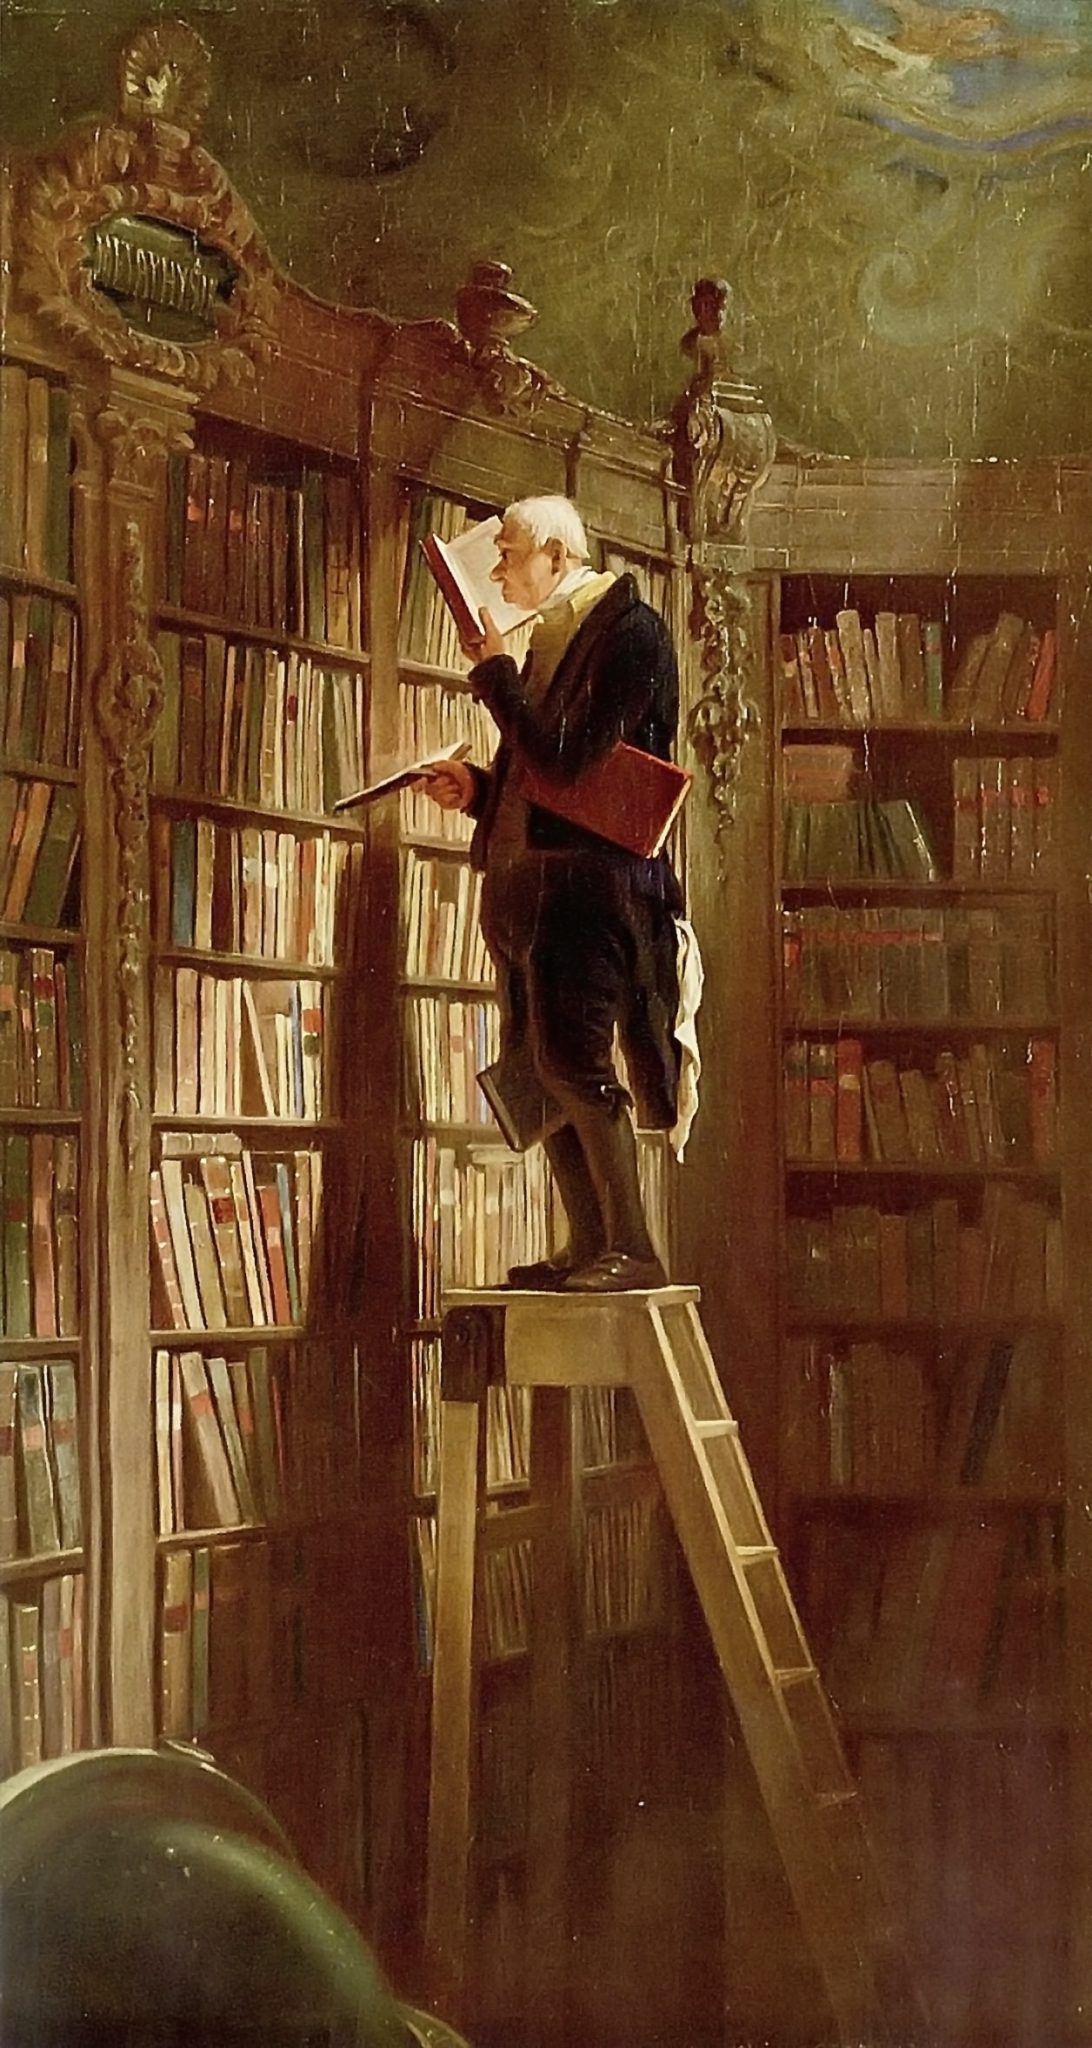 bibliotecario